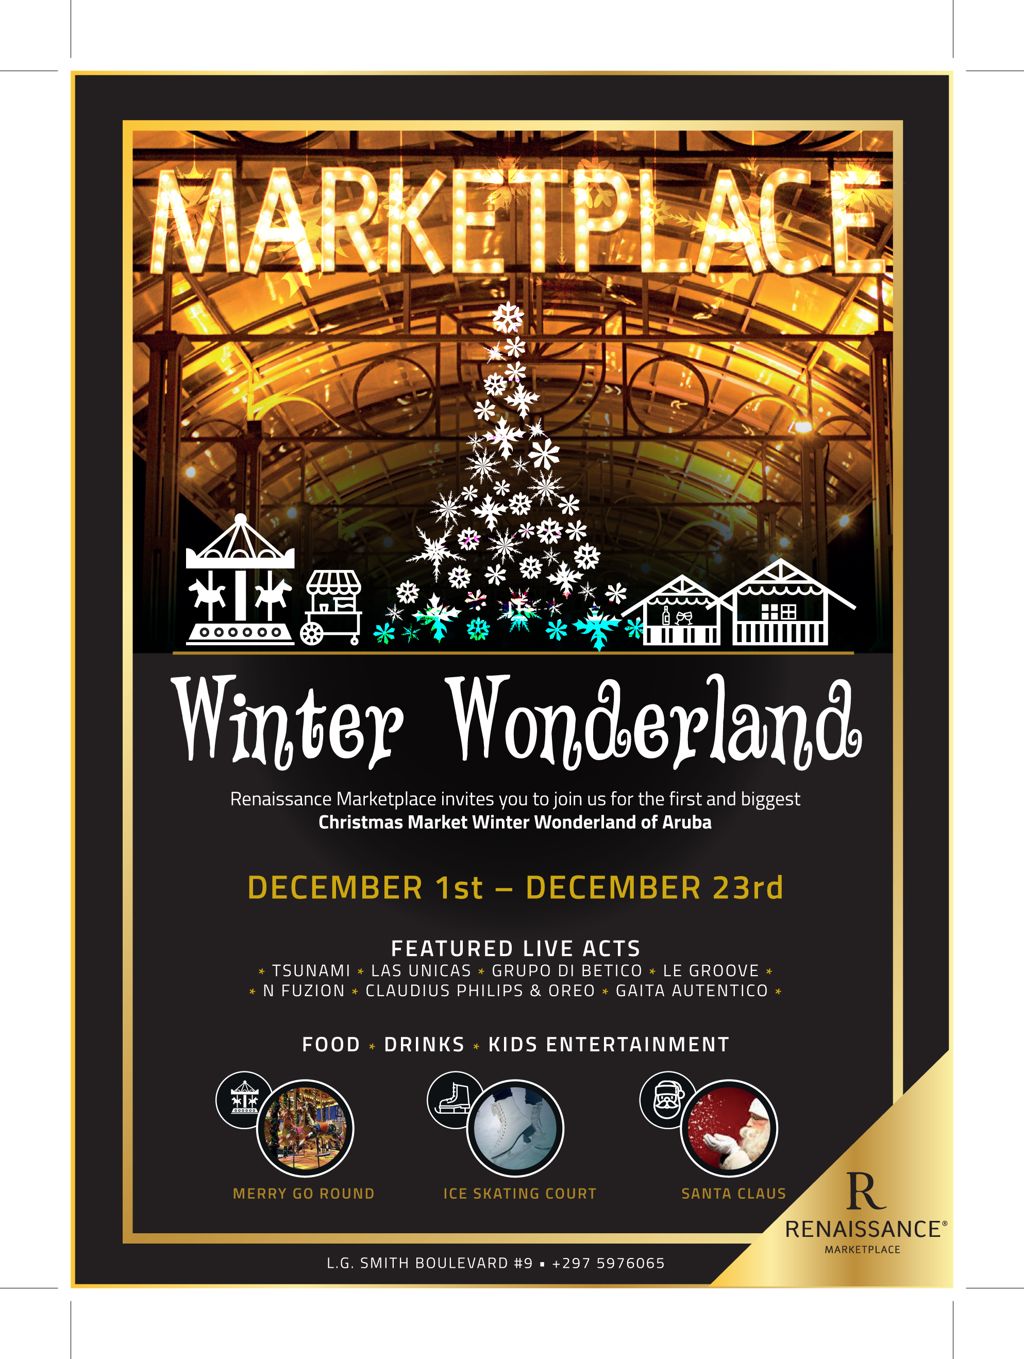 Step into a Winter Wonderland with Renaissance Marketplace Aruba